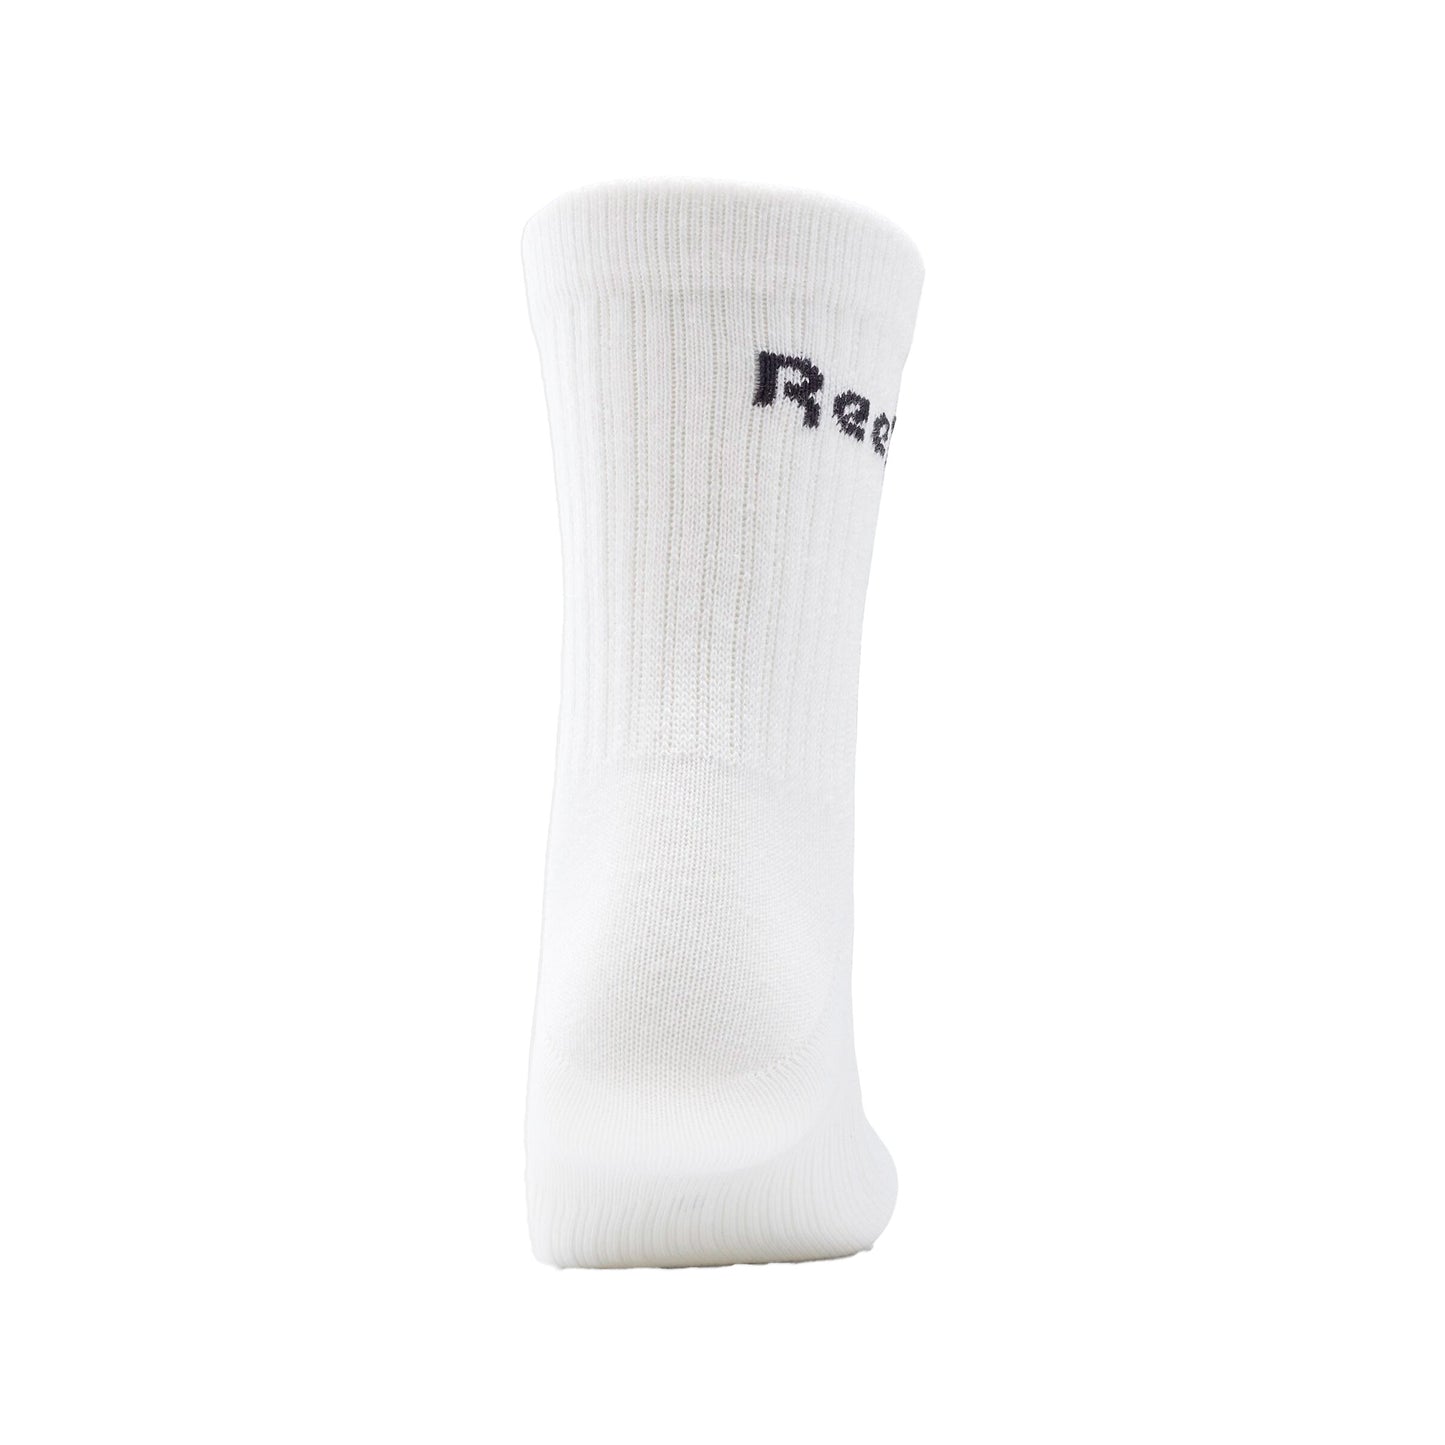 Pack 3 pairs of Reebok Active Core socks